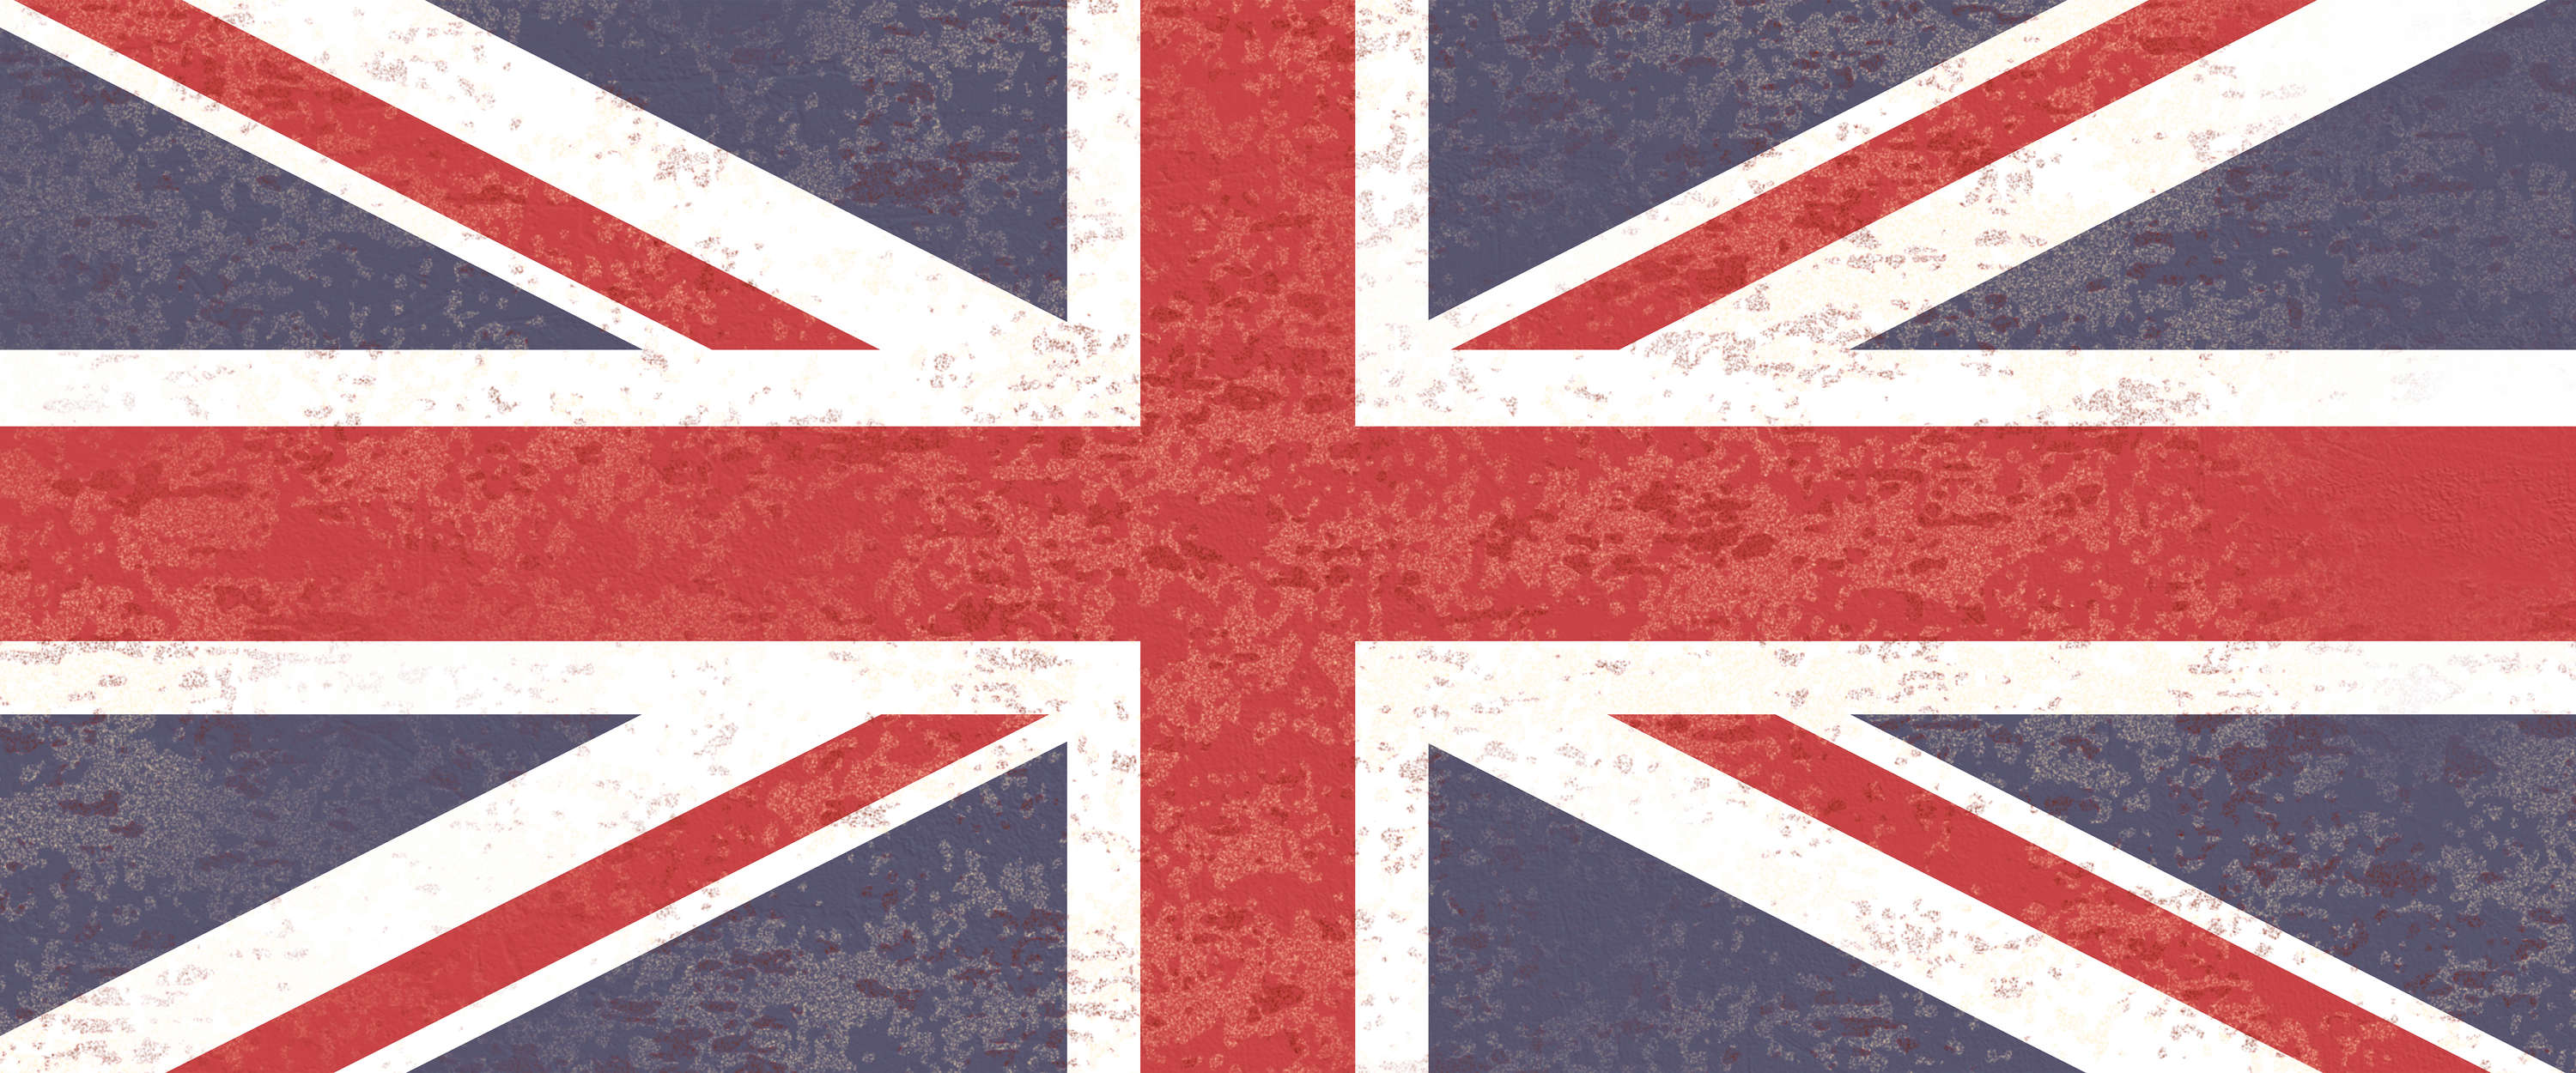             Papier peint Union Jack - drapeau de la Grande-Bretagne
        